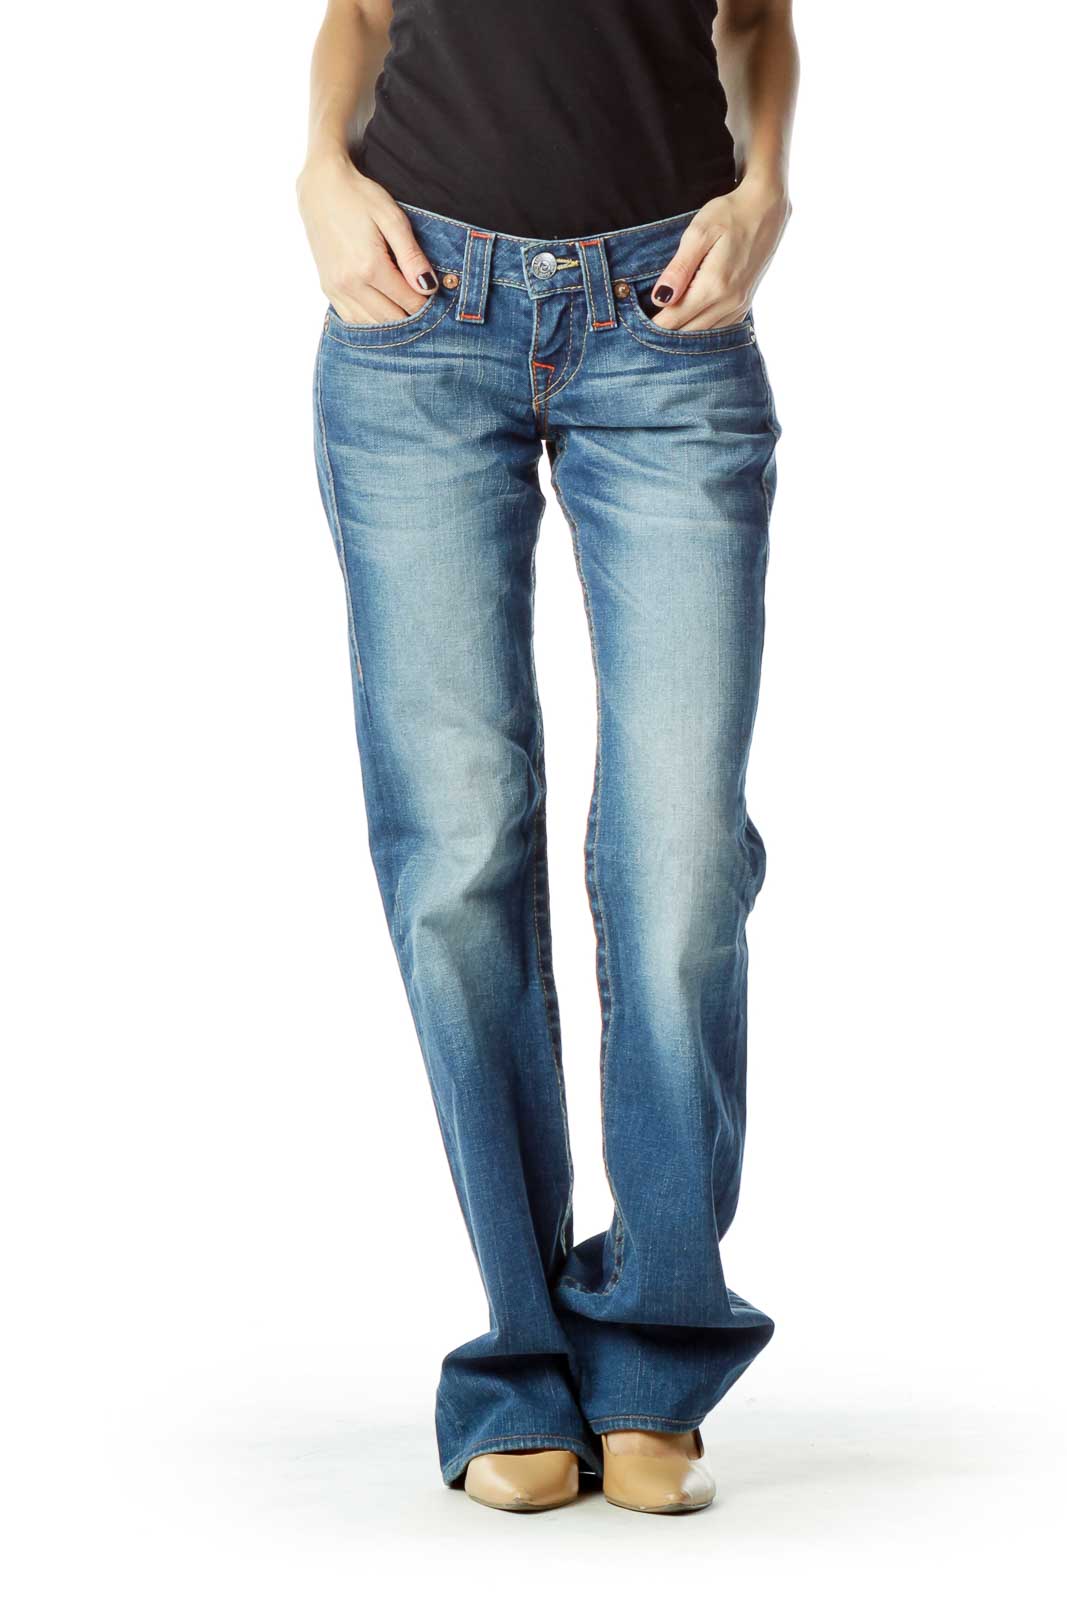 True Religion Brand Jeans - Light Blue Flared Jeans Cotton Elastane ...